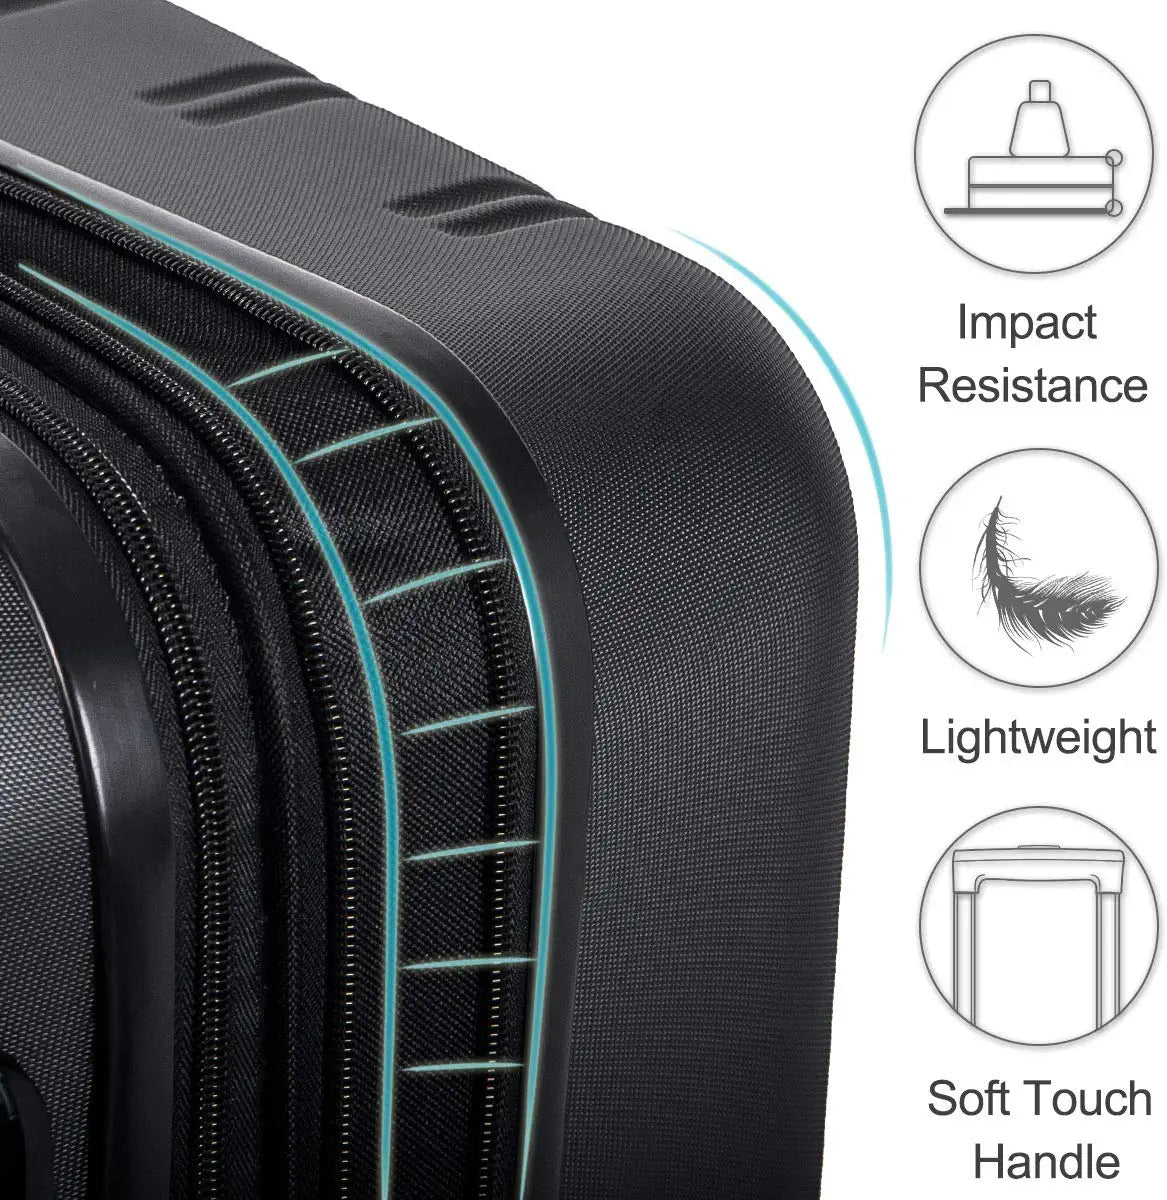 Merax Expandable Luggage TSA Locks, 3 Piece Lightweight Spinner Suitcase Set